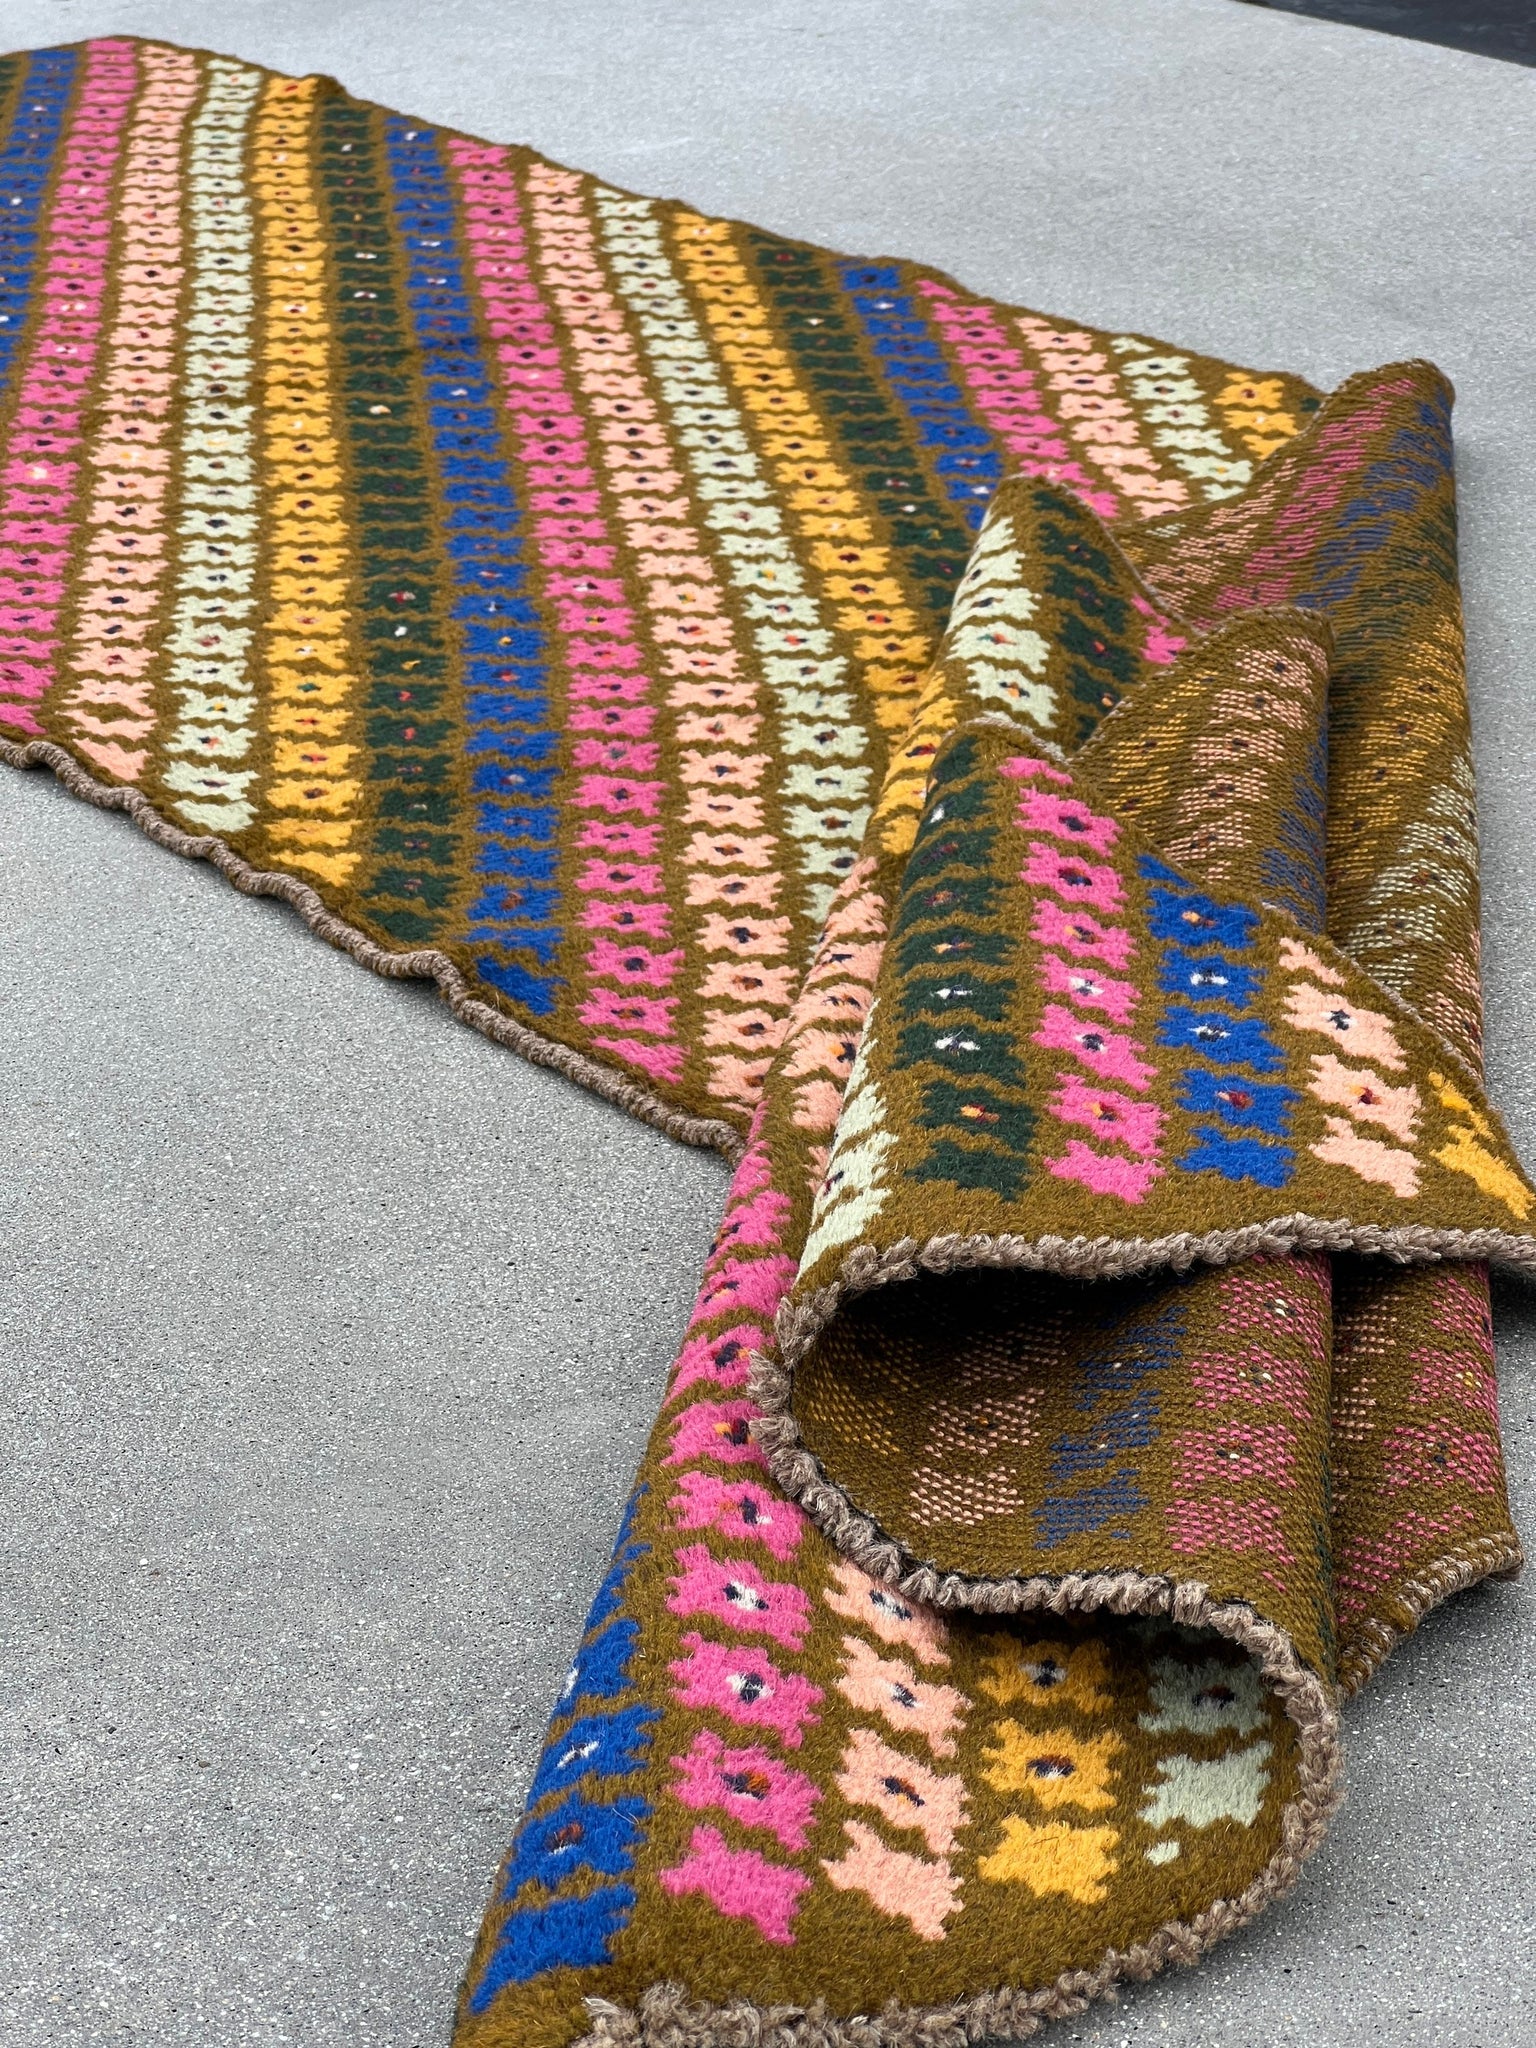 3x9 (90x275) Handmade Vintage Baluch Afghan Runner Rug | Moss Green Blue Aqua Coral Pink Soft Thick Tribal Boho Bohemian Colorful Multicolor